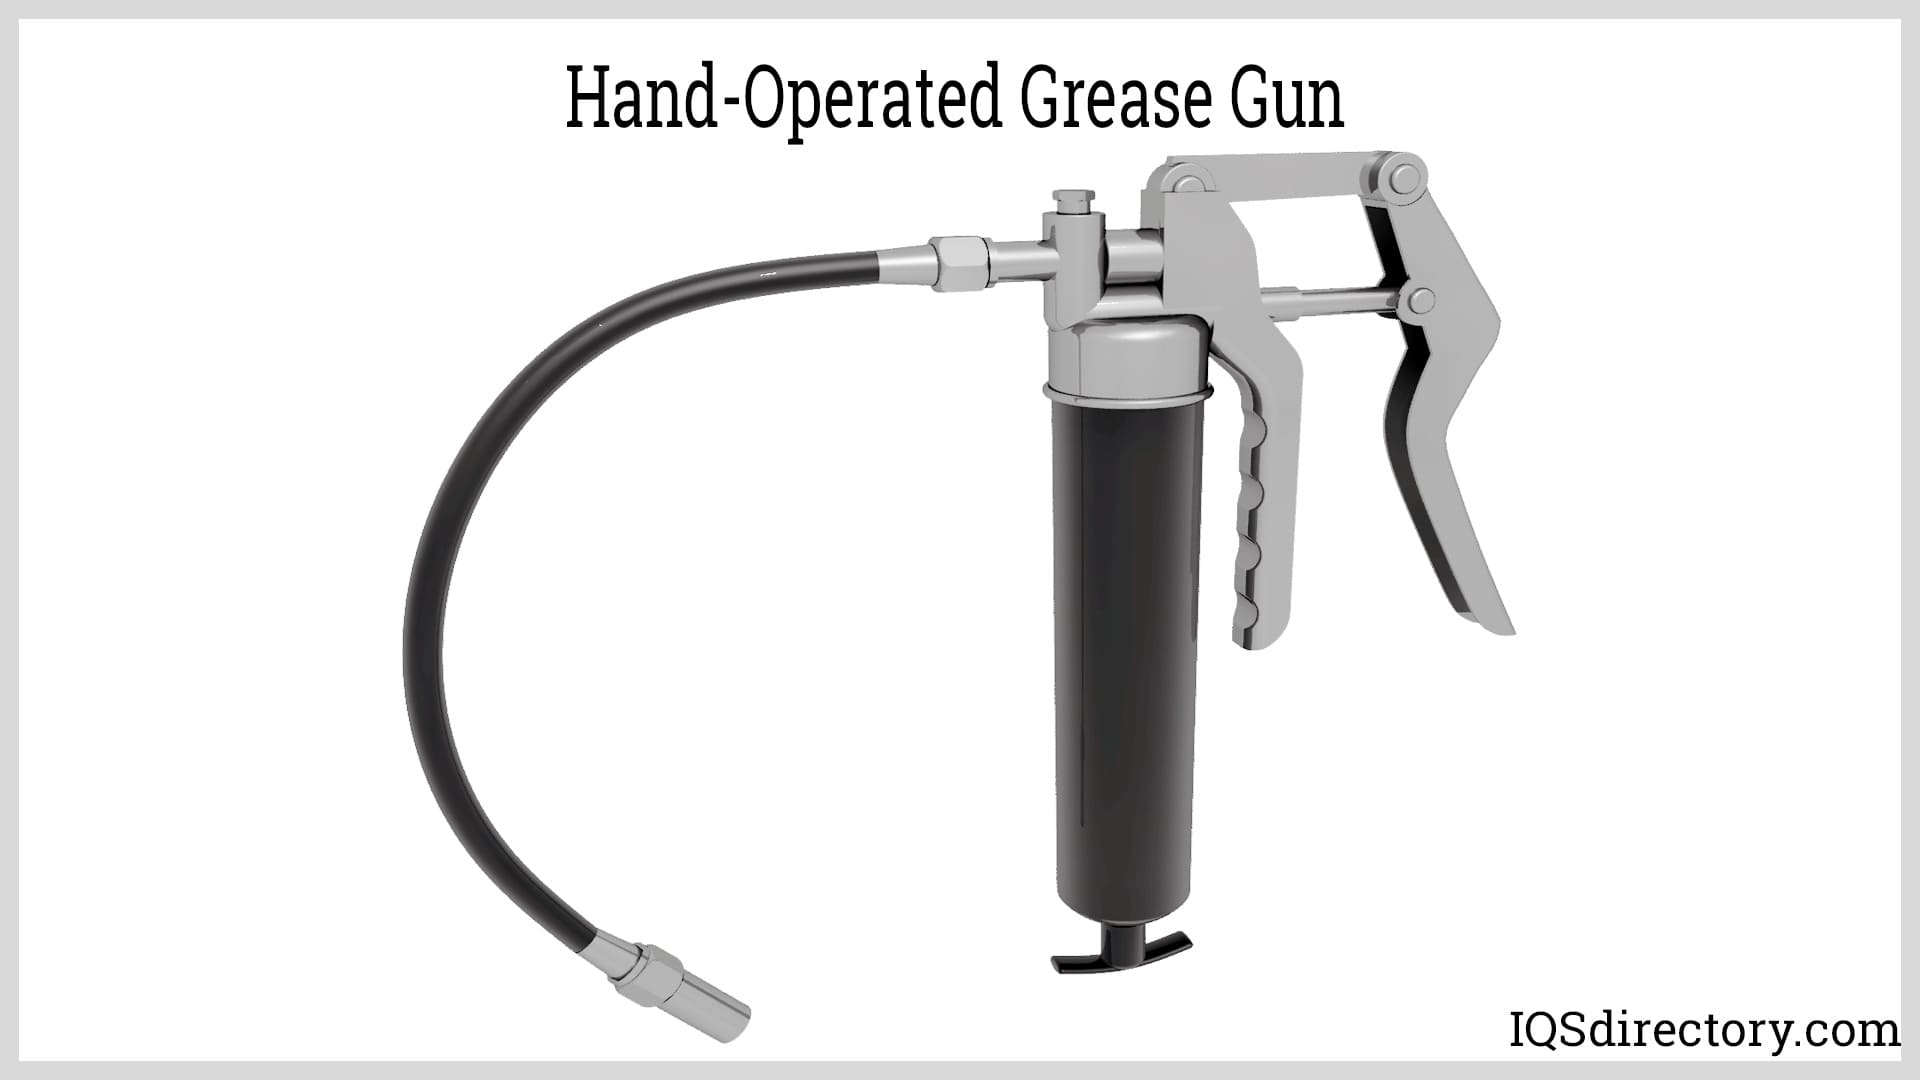 Hand-operated grease gun